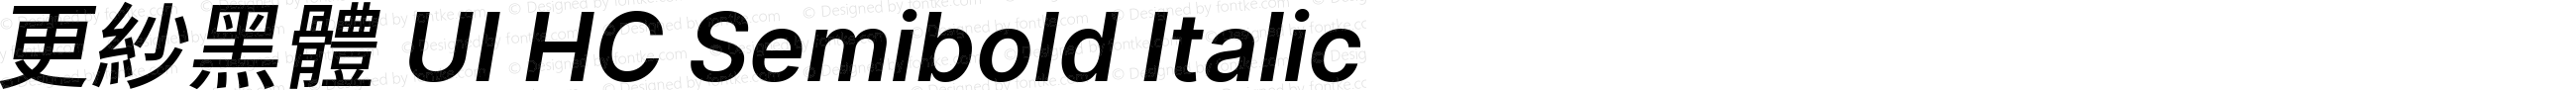 更紗黑體 UI HC Semibold Italic